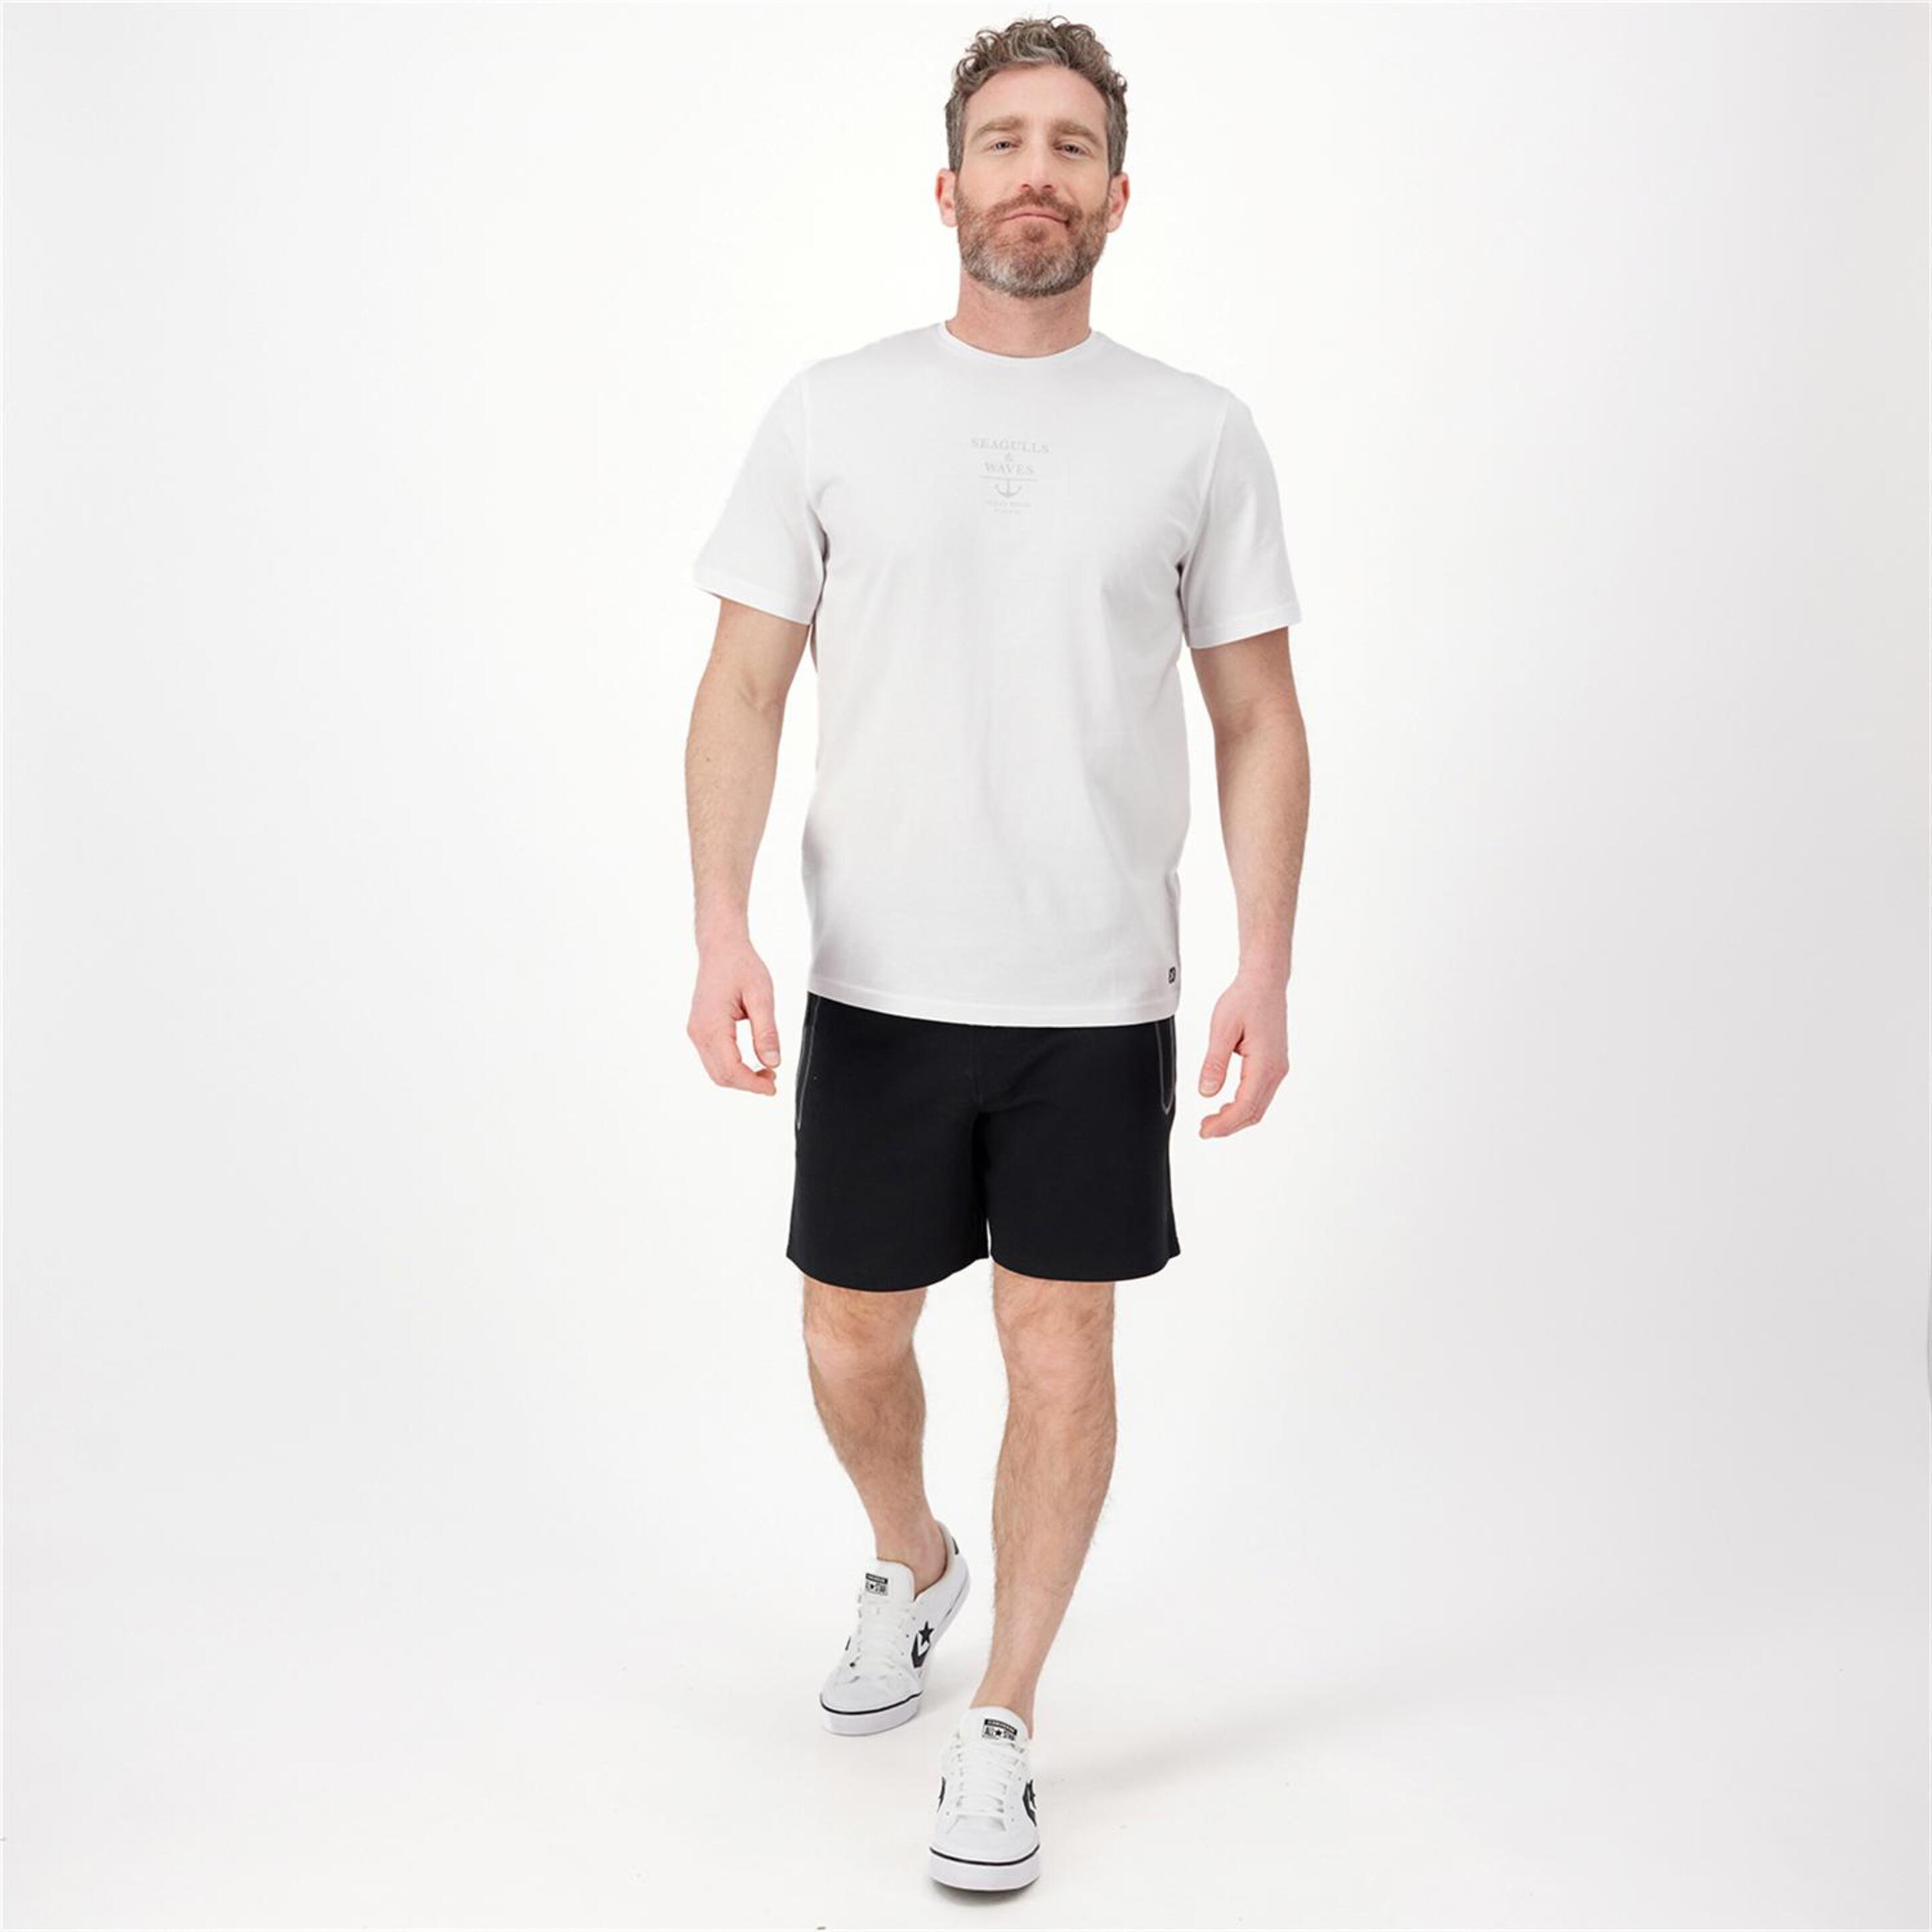 Silver Nautic - Blanco - Camiseta Hombre